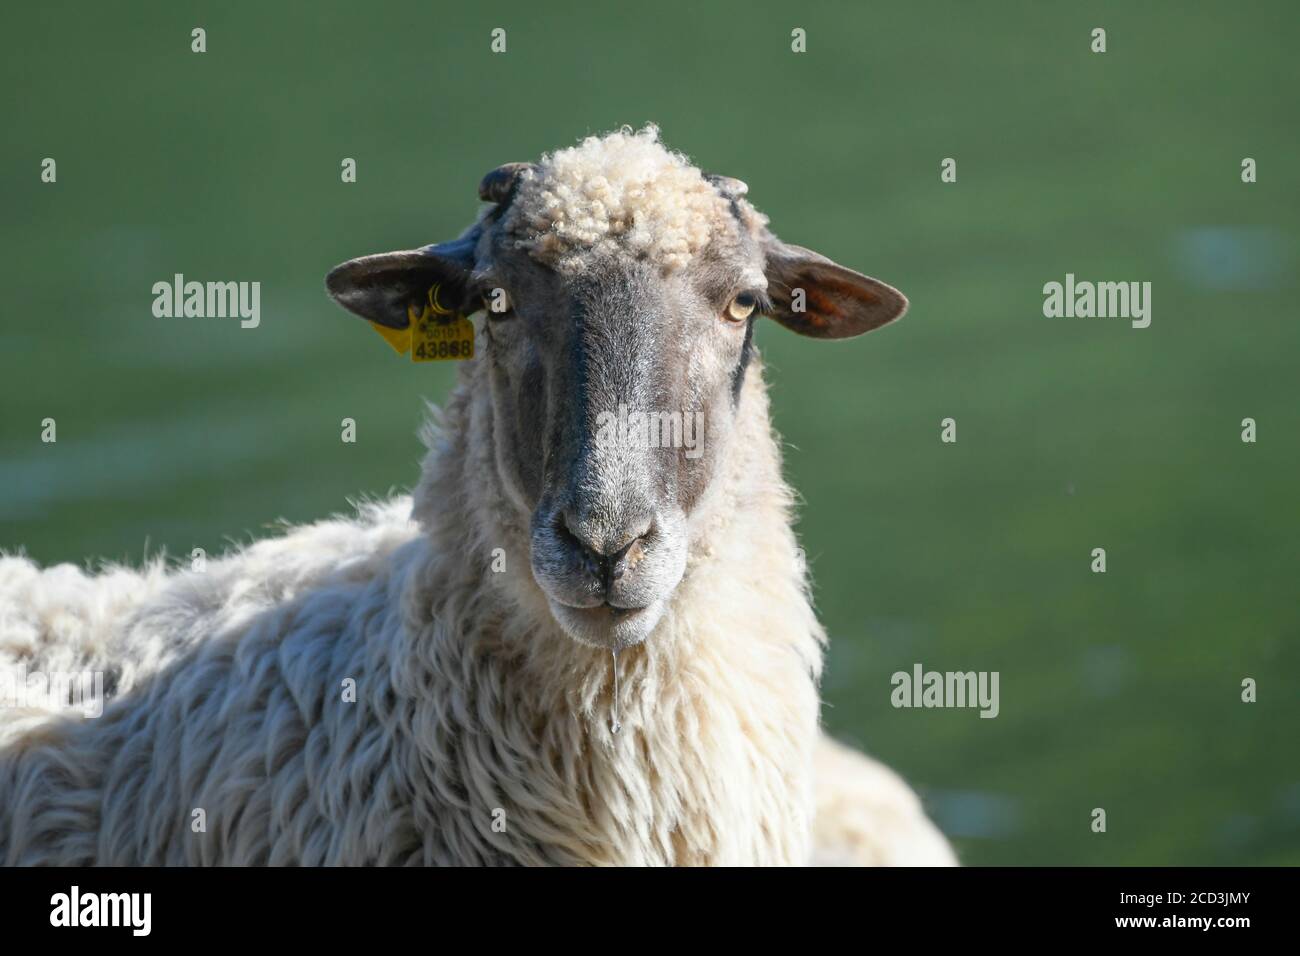 Close-up of a sheep Stock Photo